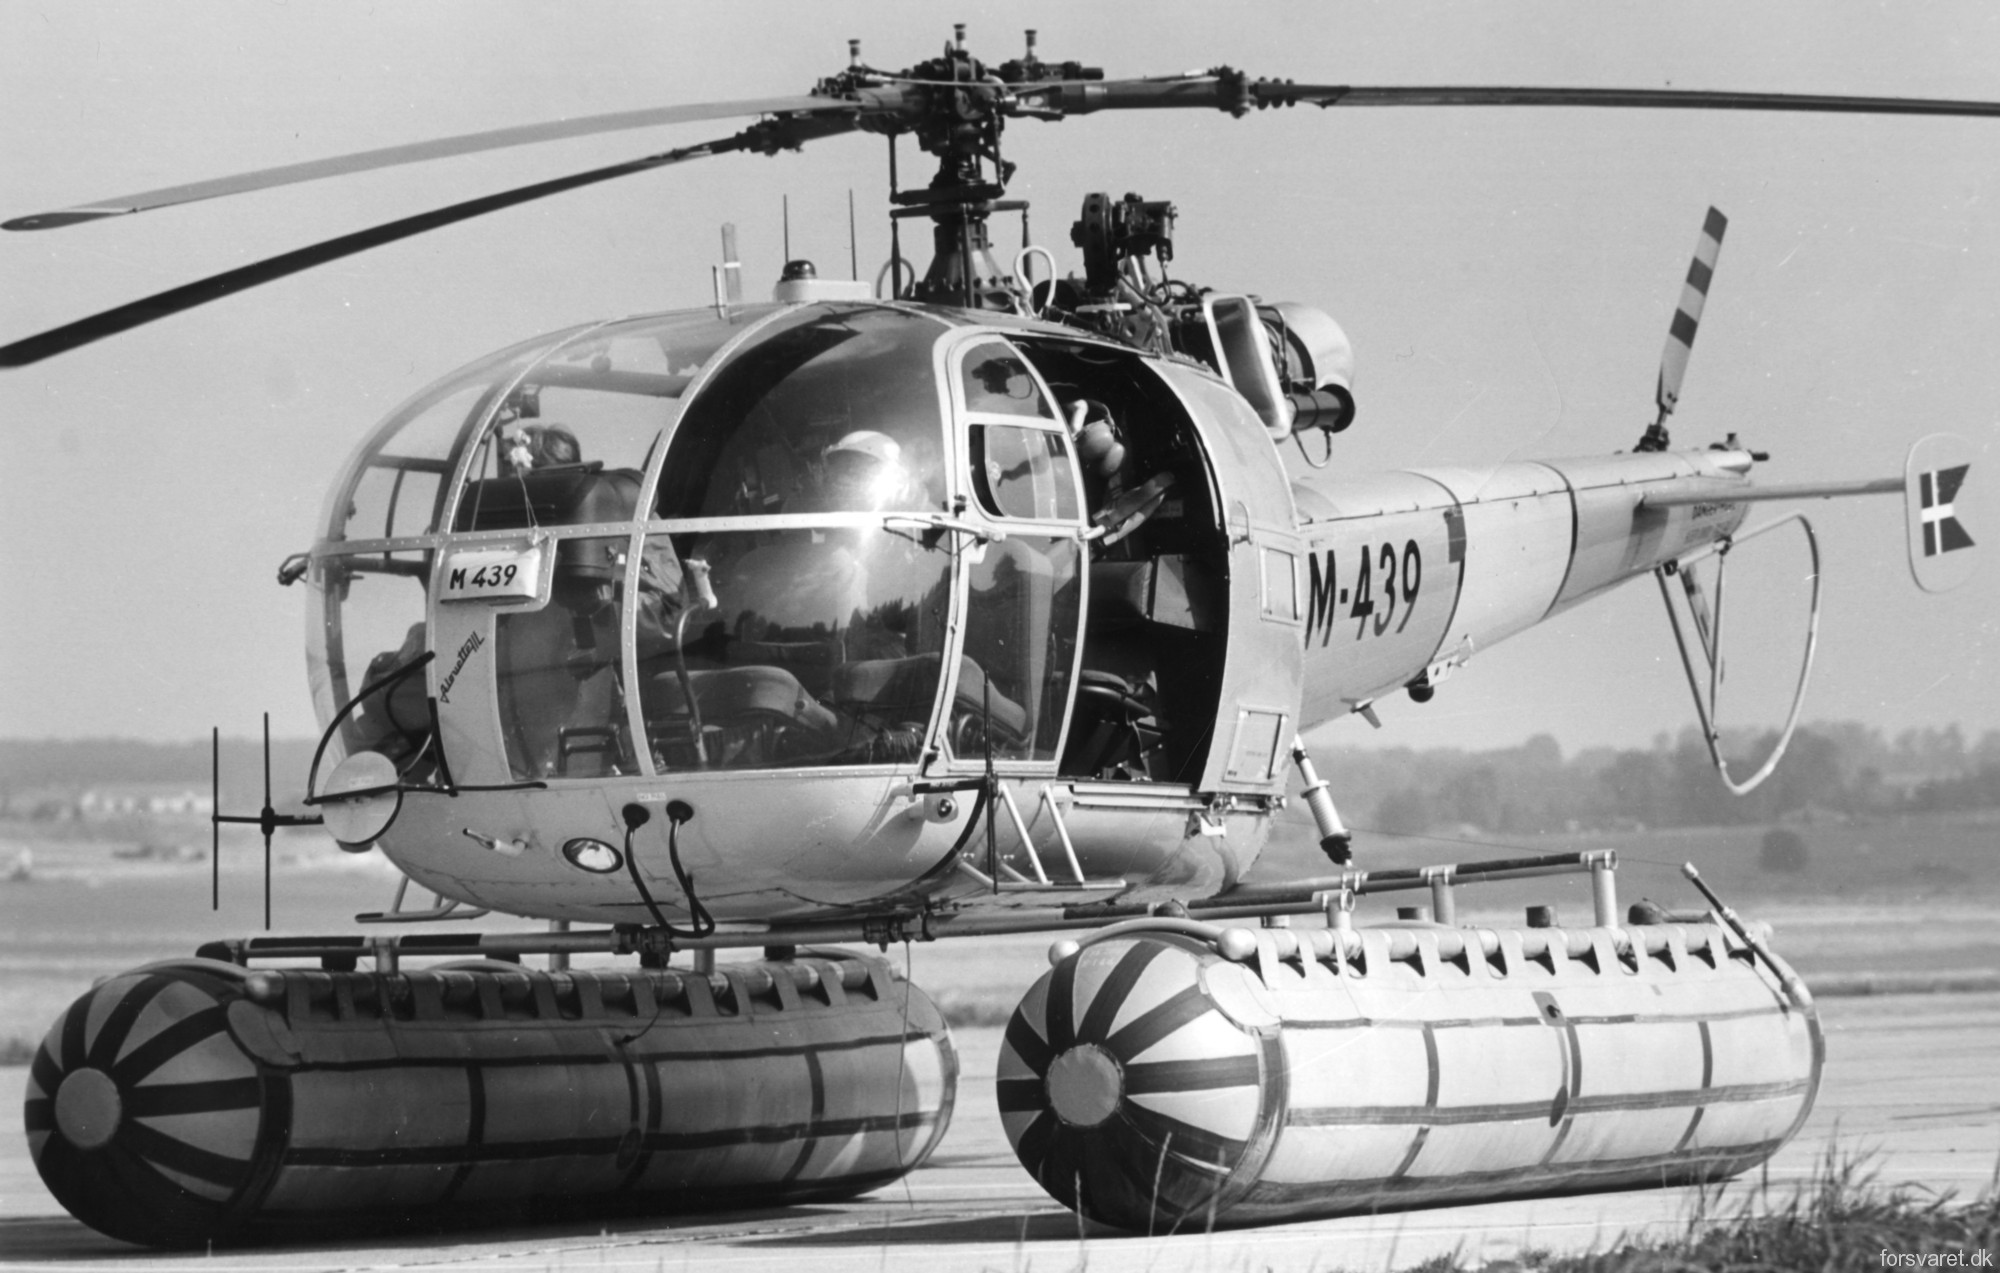 sa 316b alouette iii helicopter royal danish navy søværnet kongelige danske marine sud aviation m-439 11